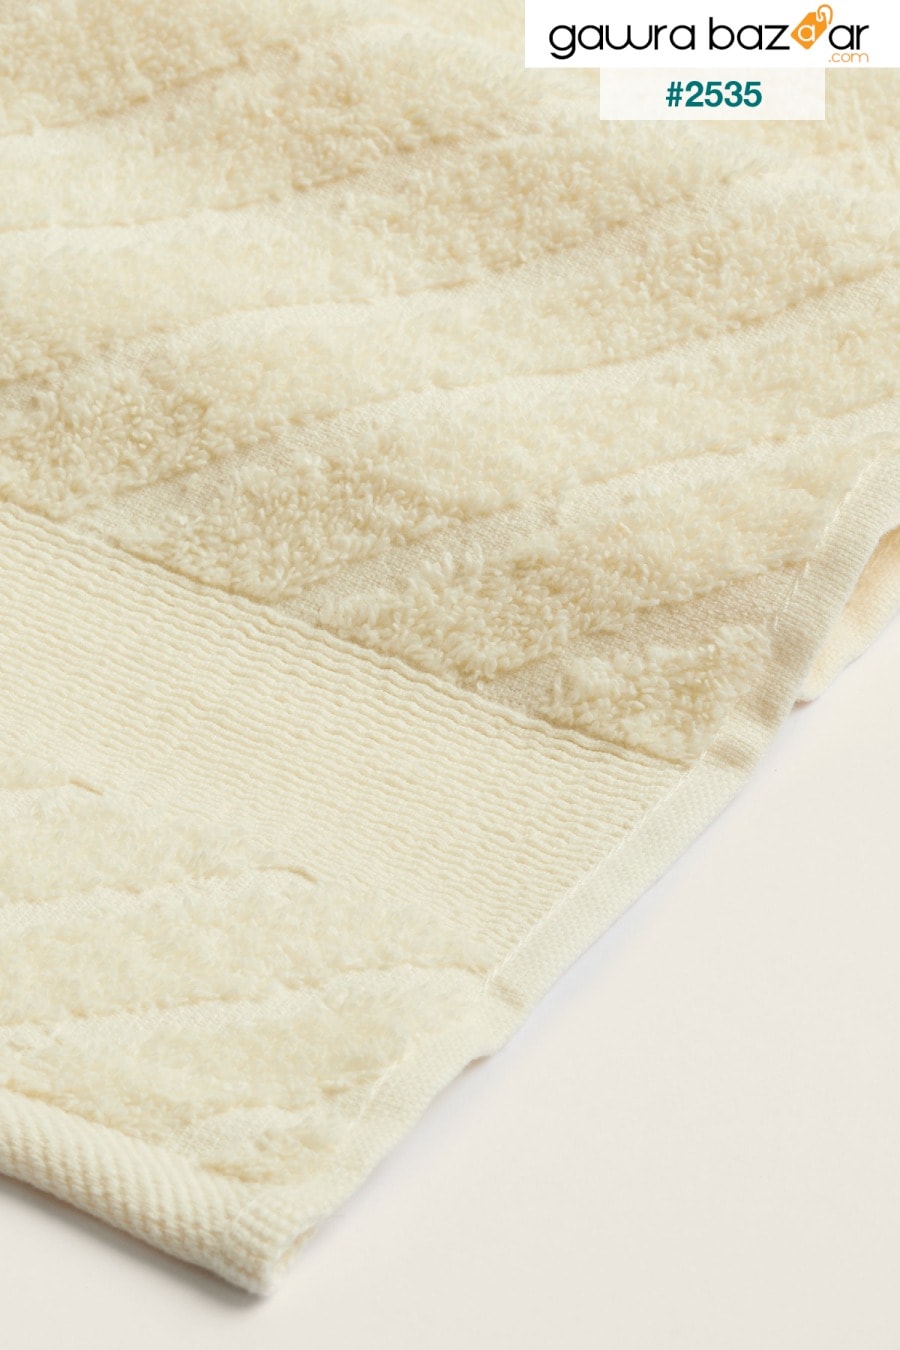 Lycian Jacquard Border Herringbone 4 Pcs Hand Face Towel Set 100٪ Cotton Soft Use Daily Use 1023a Koza Home 3